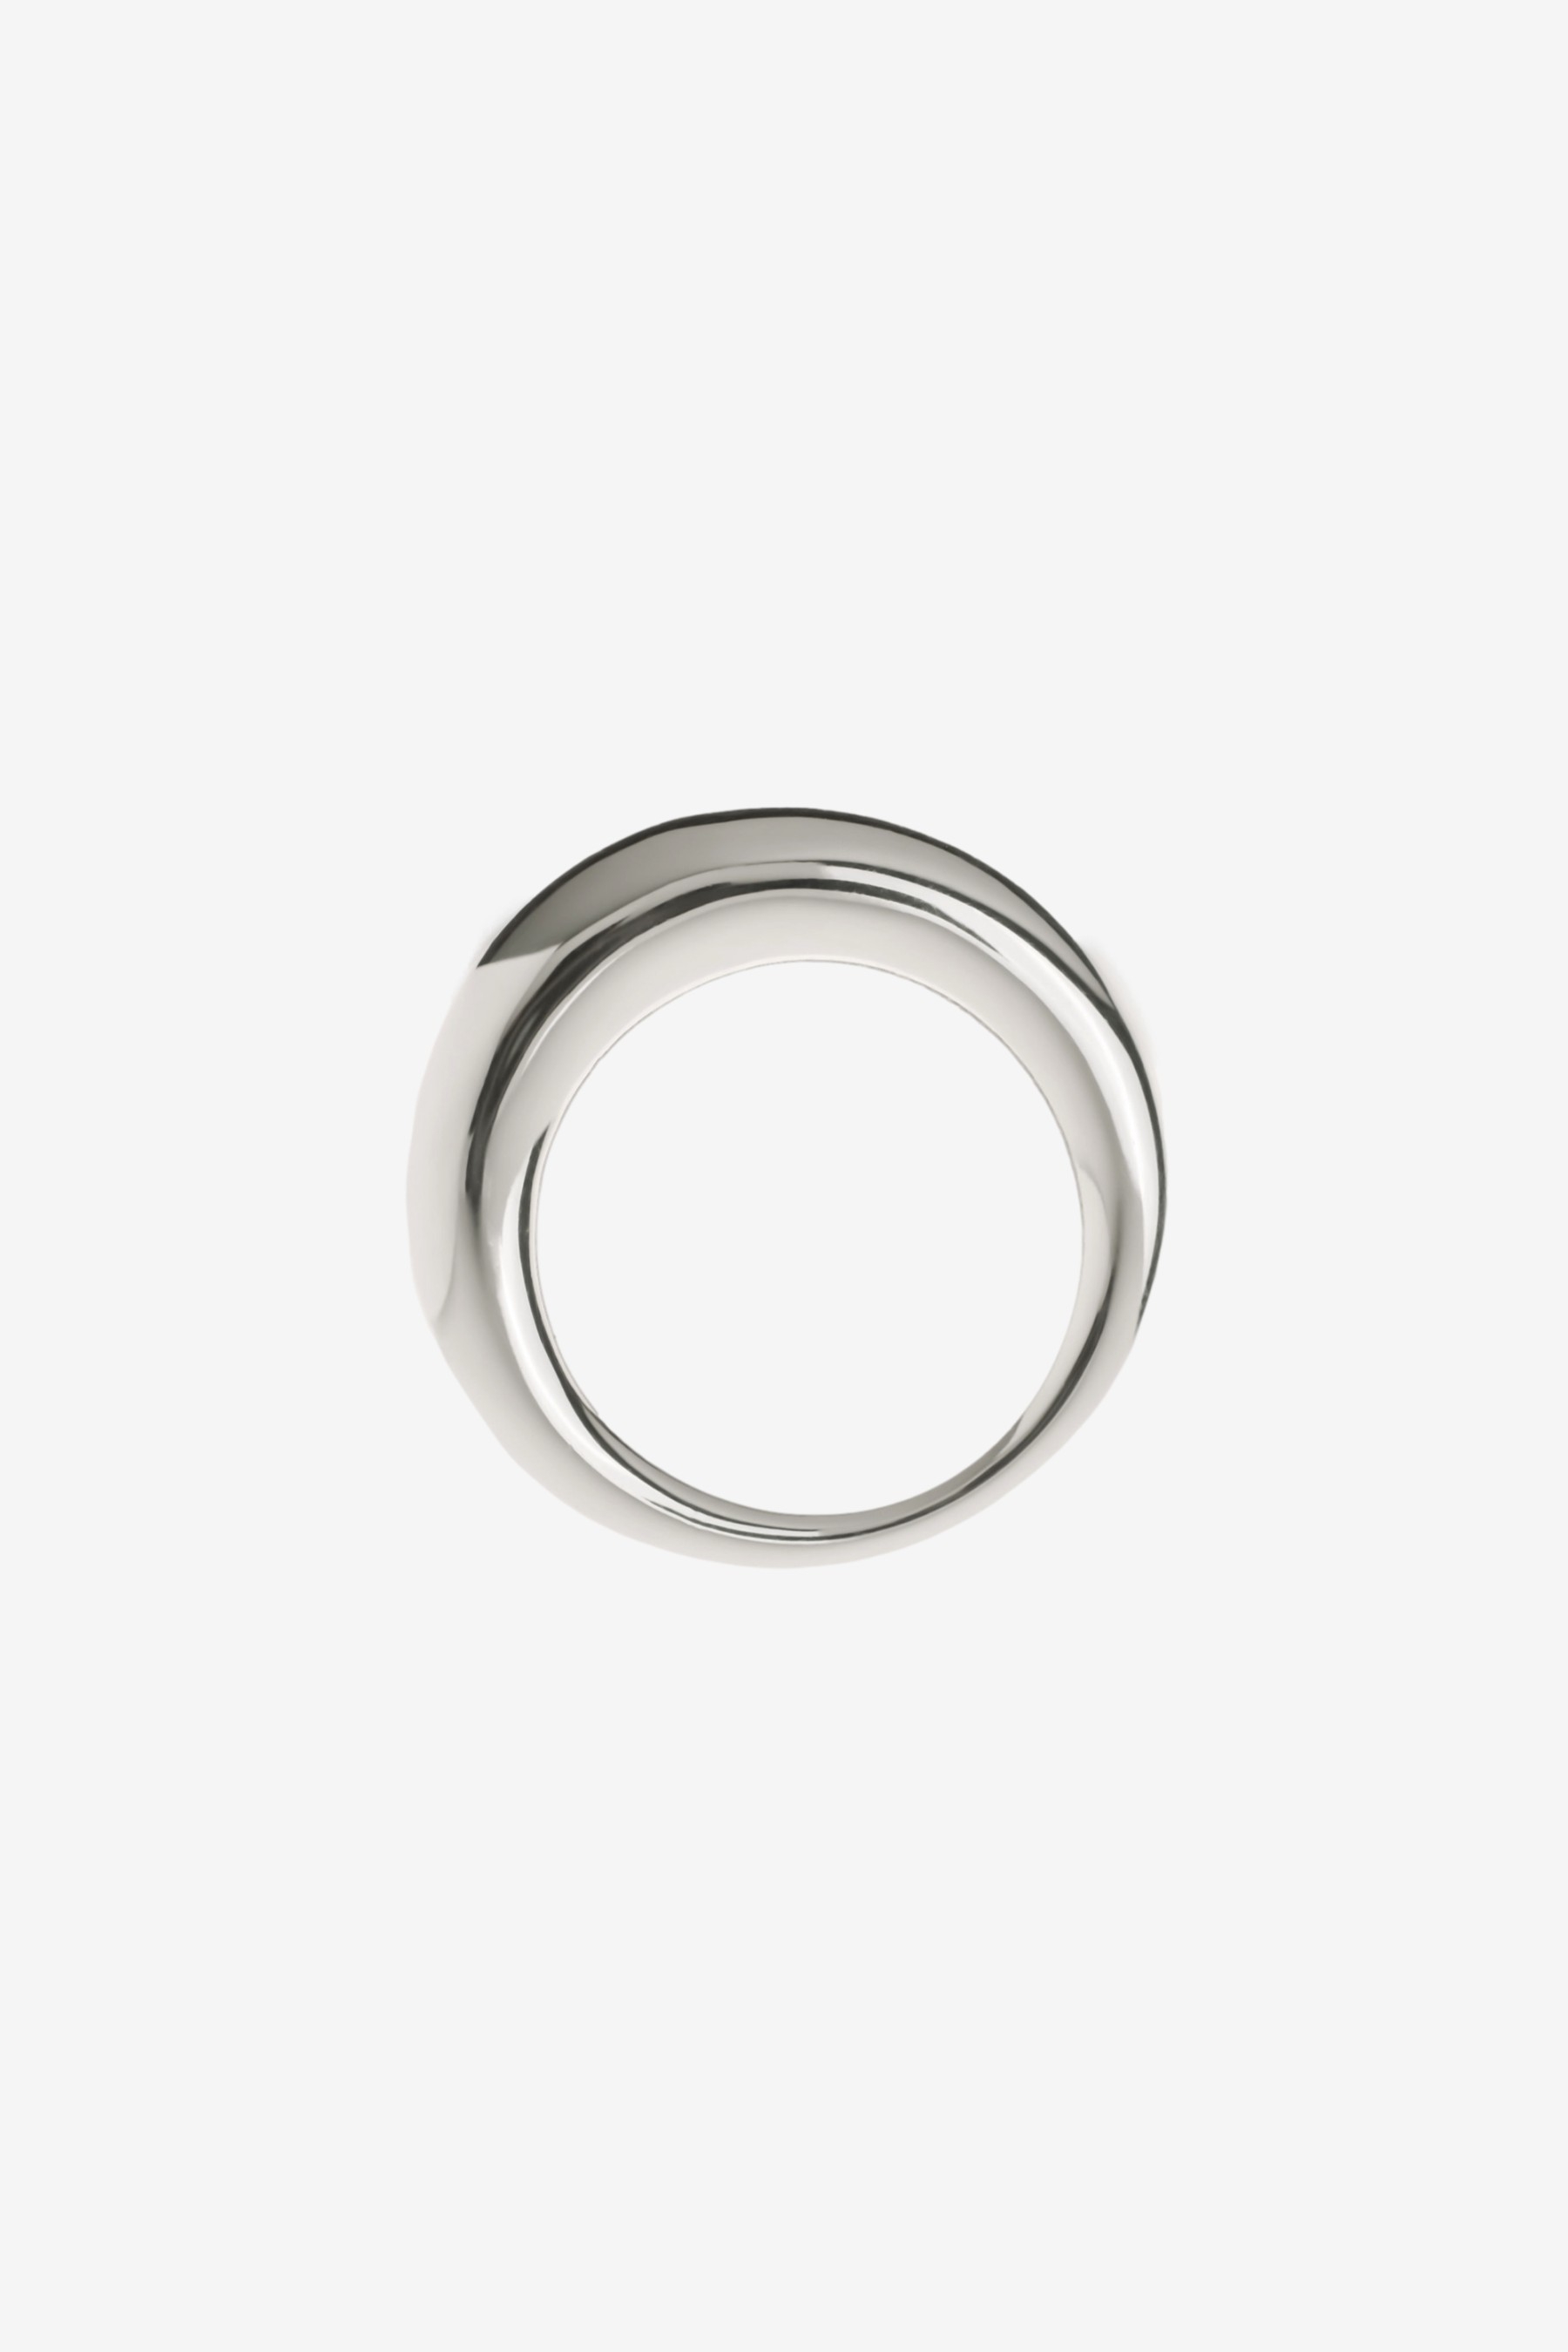 Buy Silver Snake Ring, Mens Ring Silver, Strong Stainless Steel Snake  Serpent Rings for Men Boho Rings, Unisex Ring Silver by Twistedpendant  Online in India - Etsy